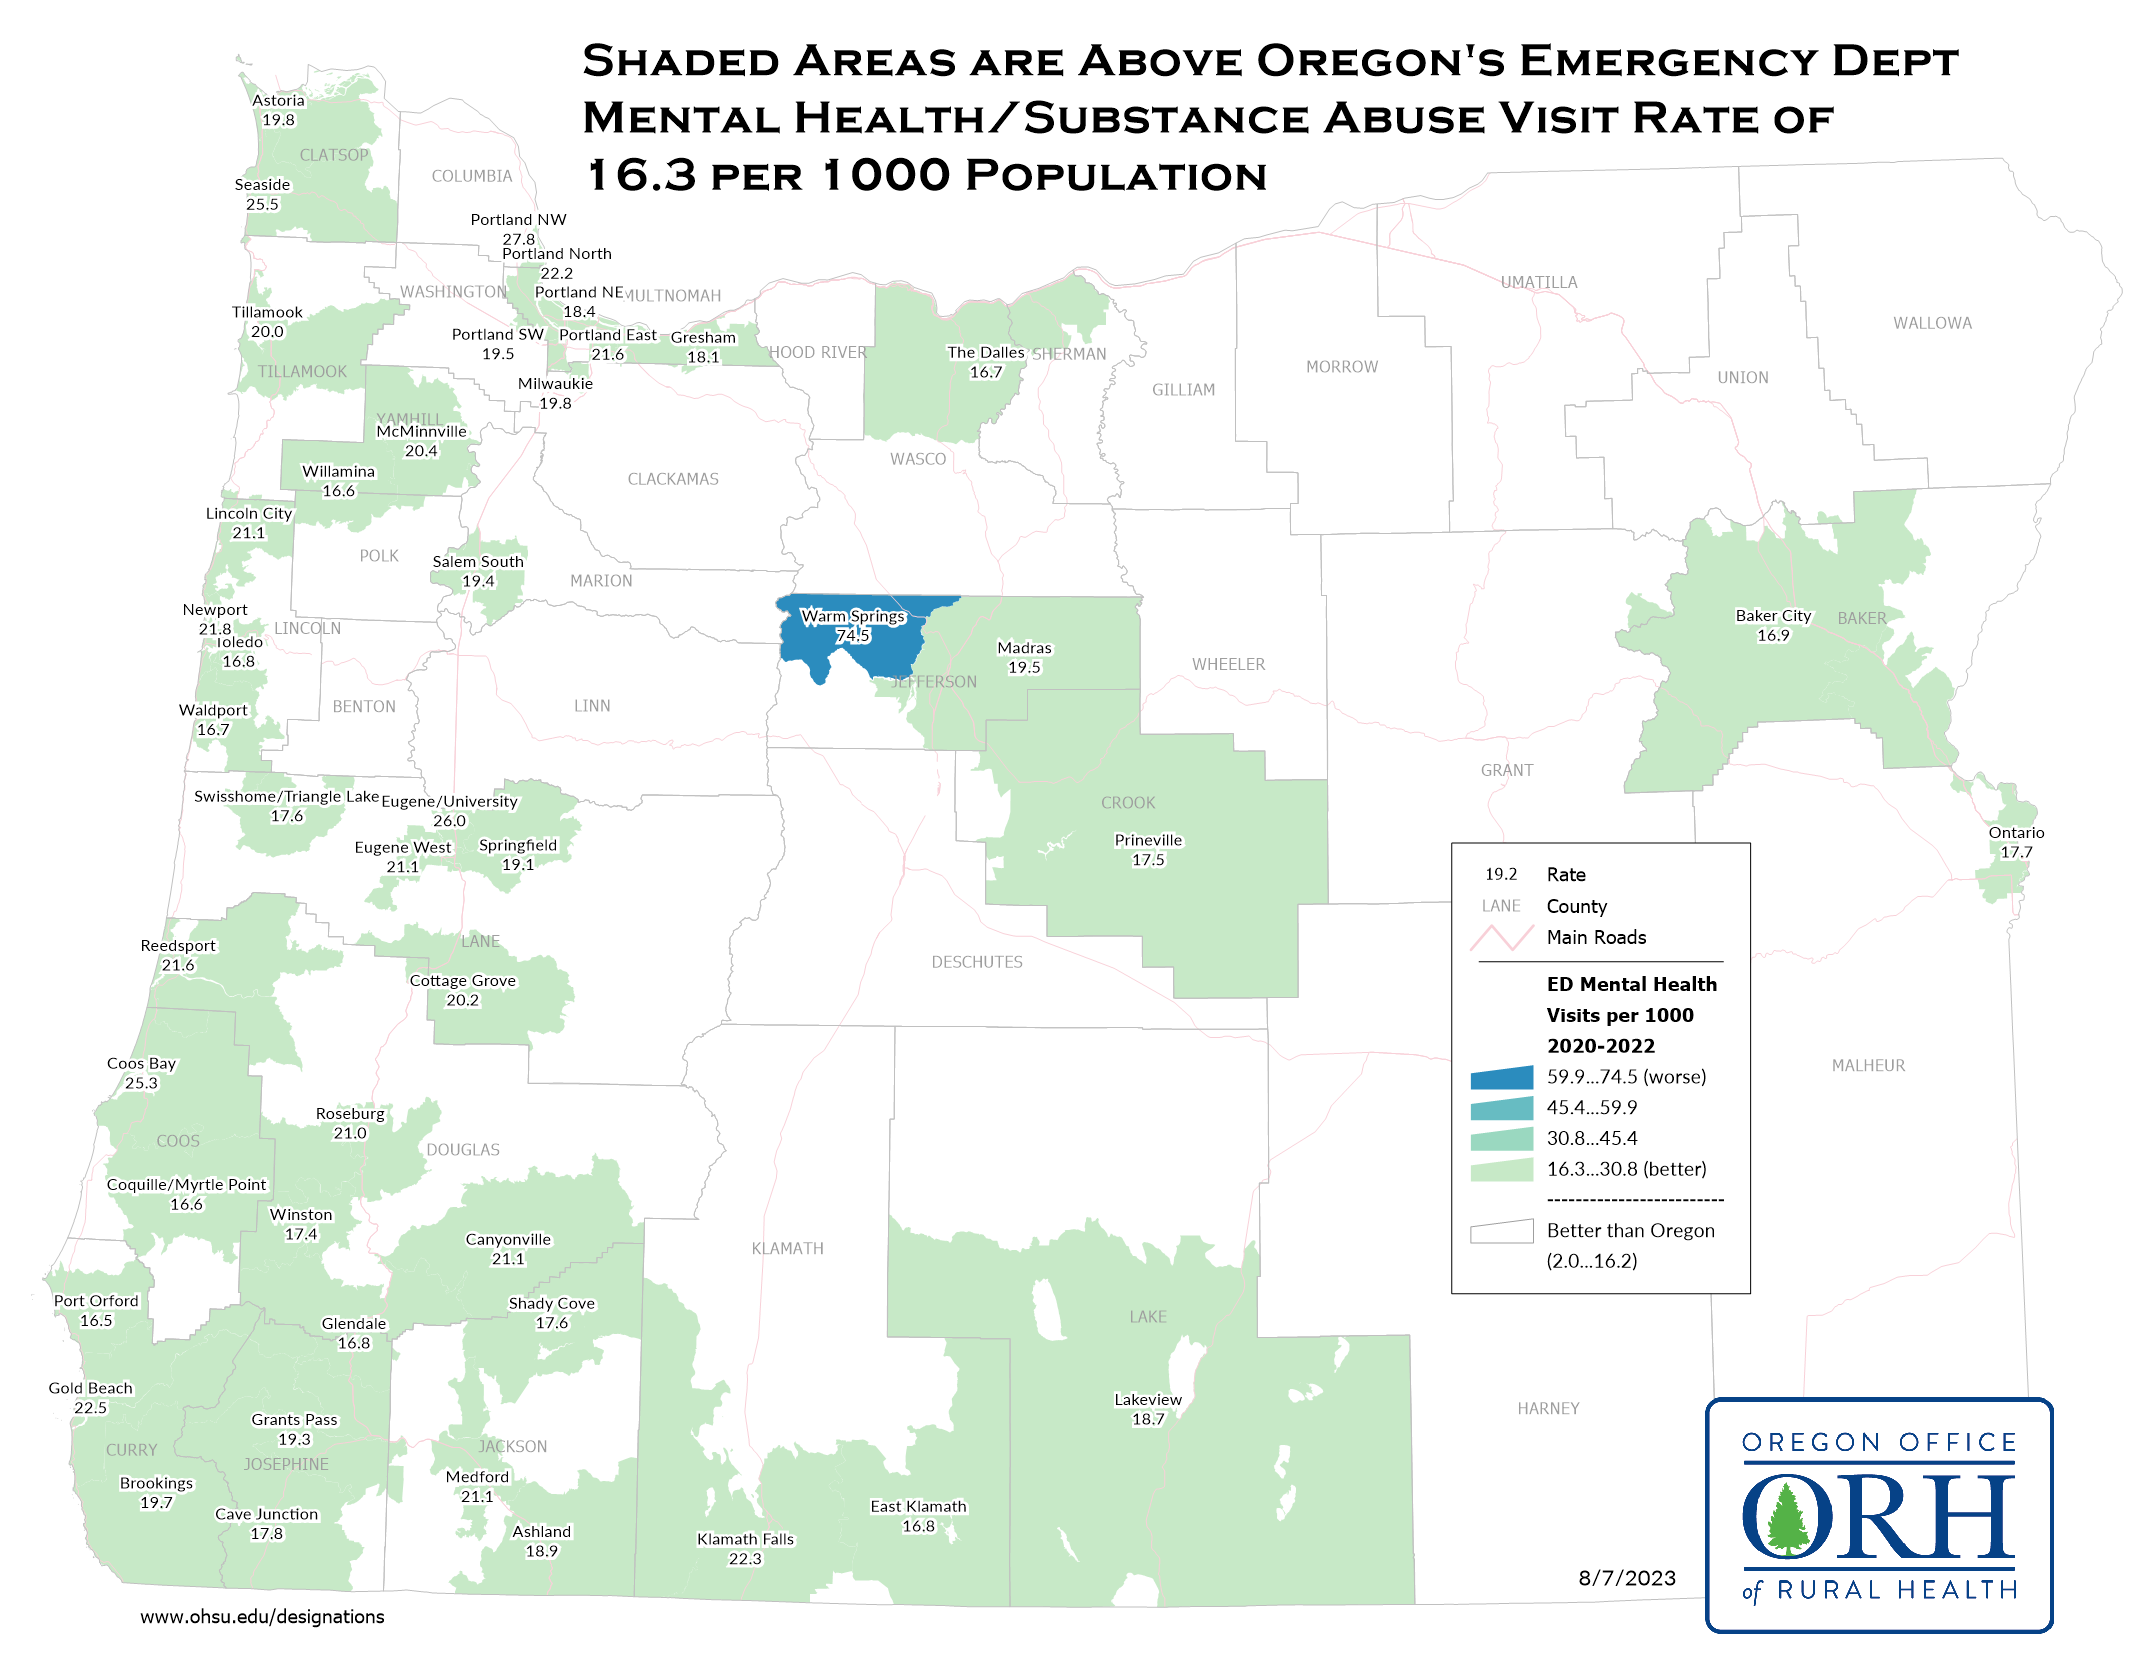 Emergency Department Mental Health/Substance Abuse Visit Map